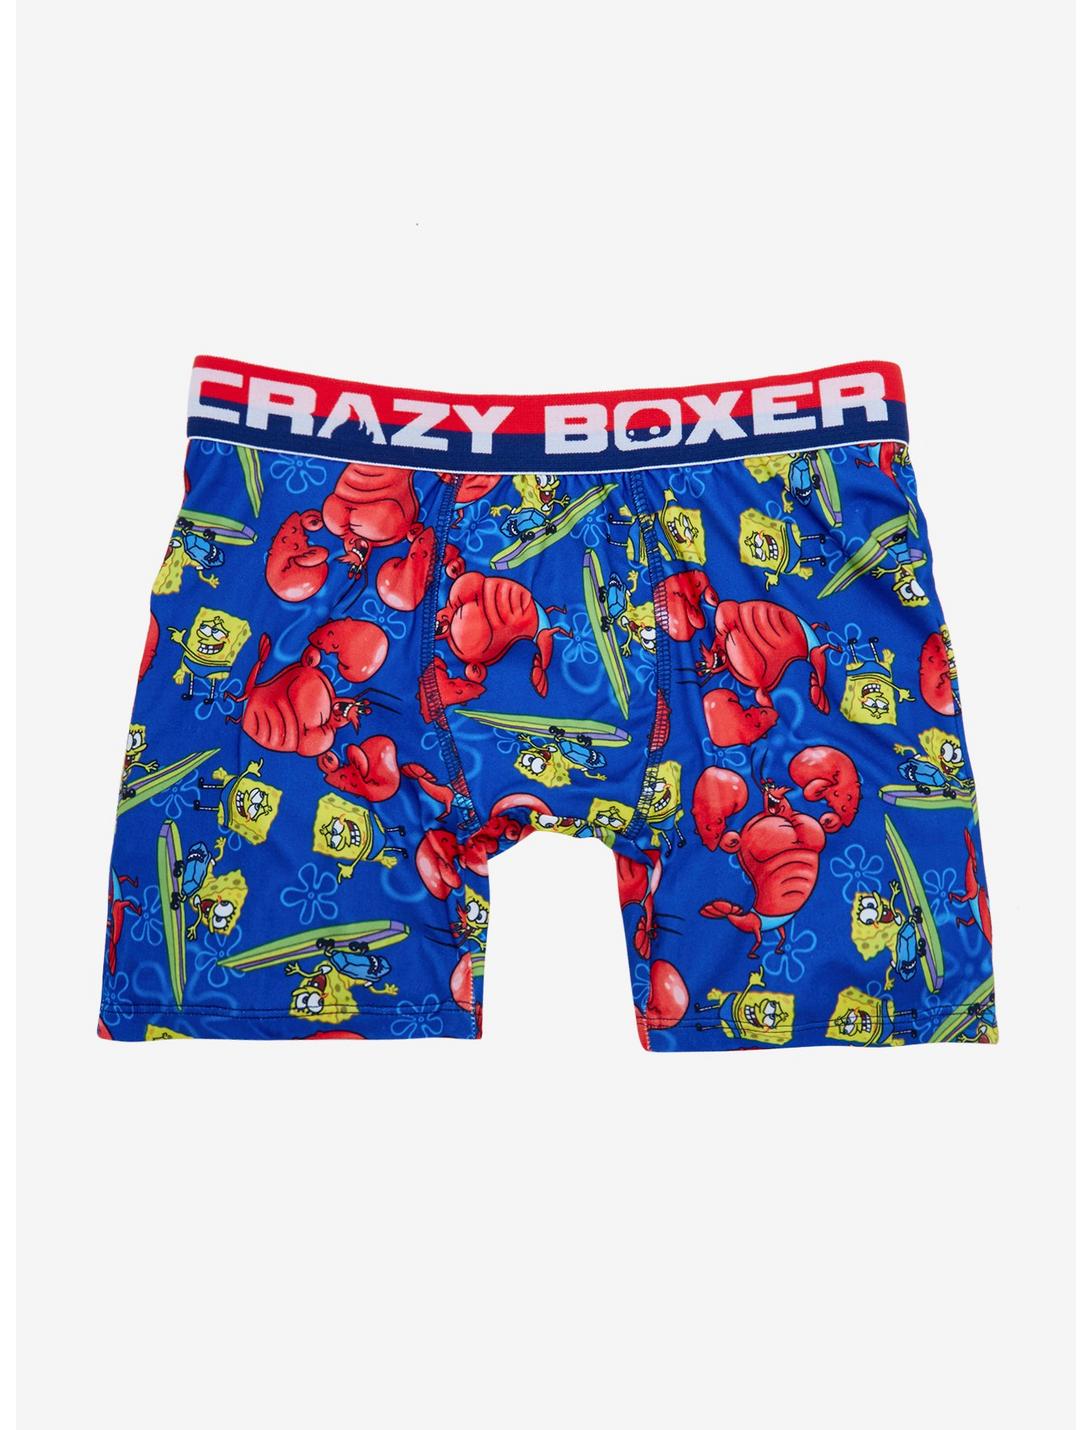 Spongebob Ripped Pants Boxer Briefs, BLUE, hi-res